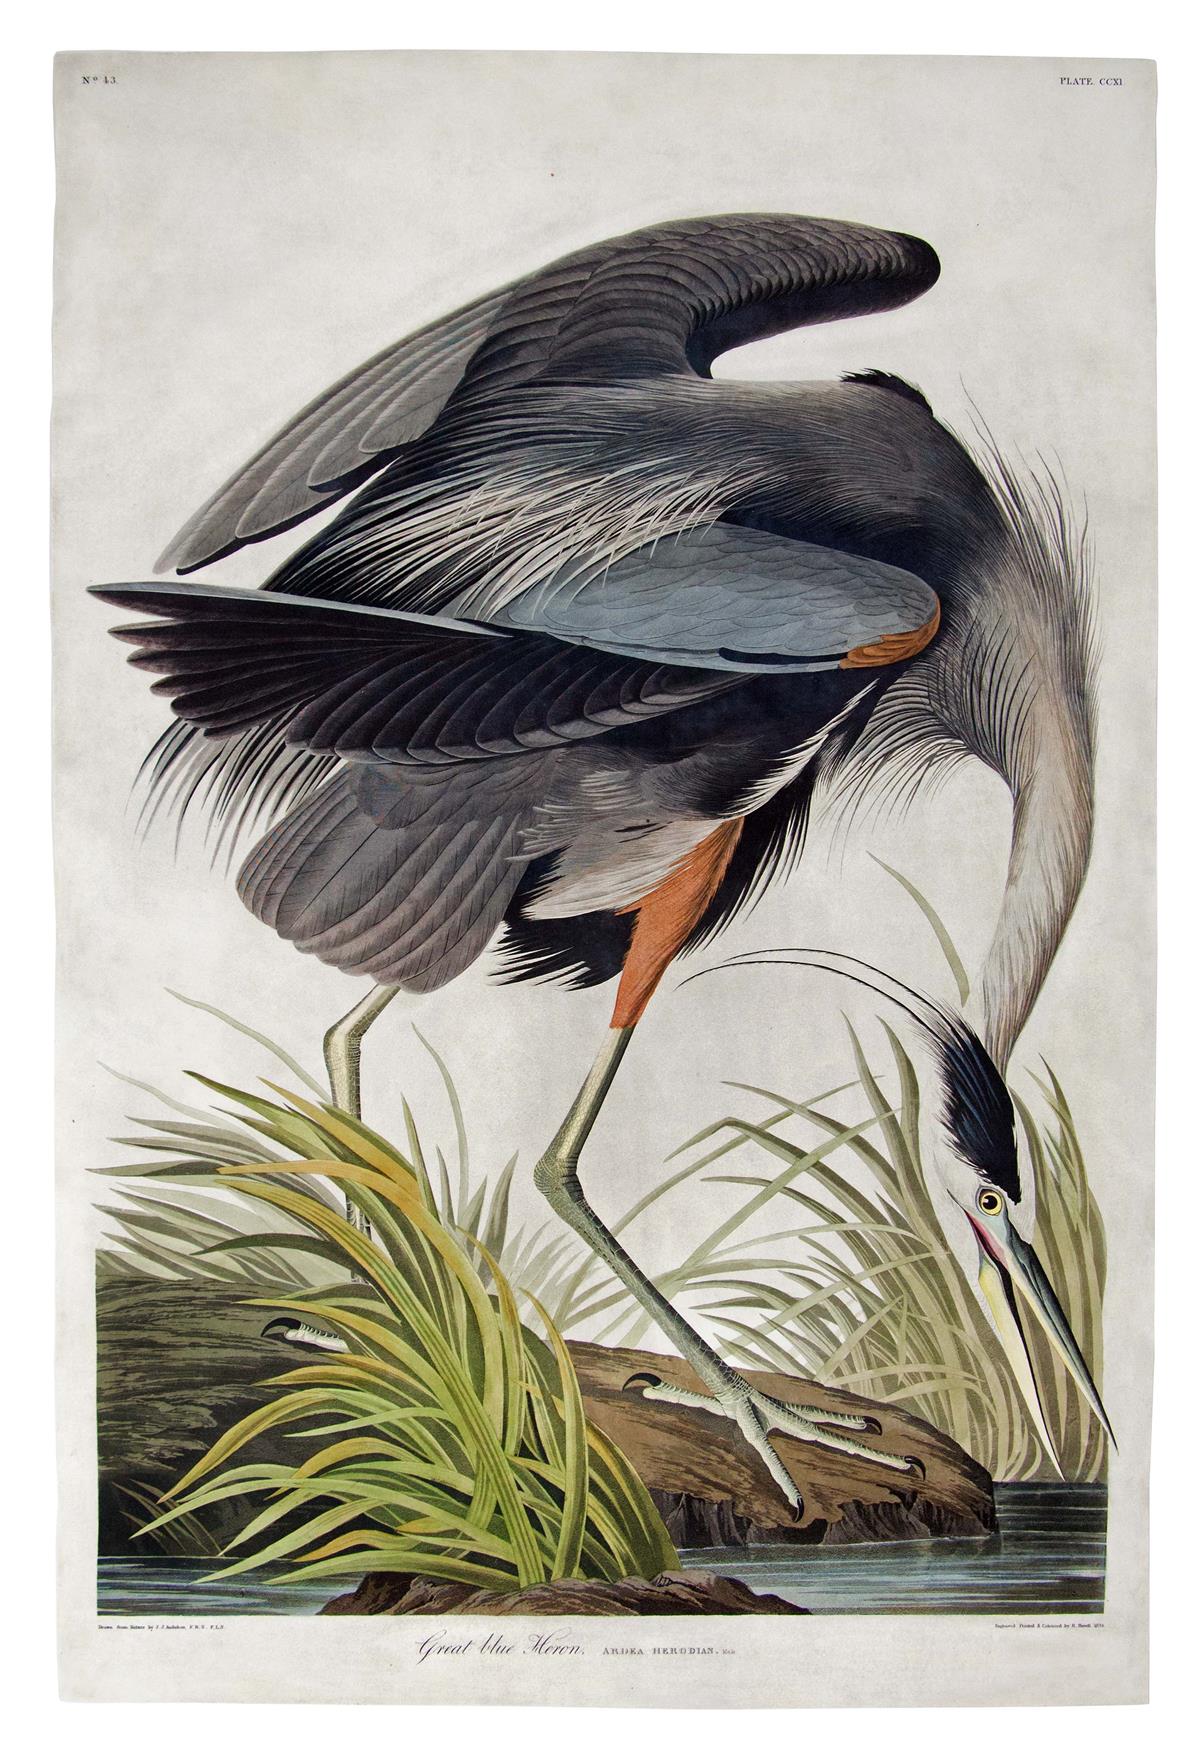 AUDUBON, JOHN JAMES. Great Blue Heron. Plate CCXI.